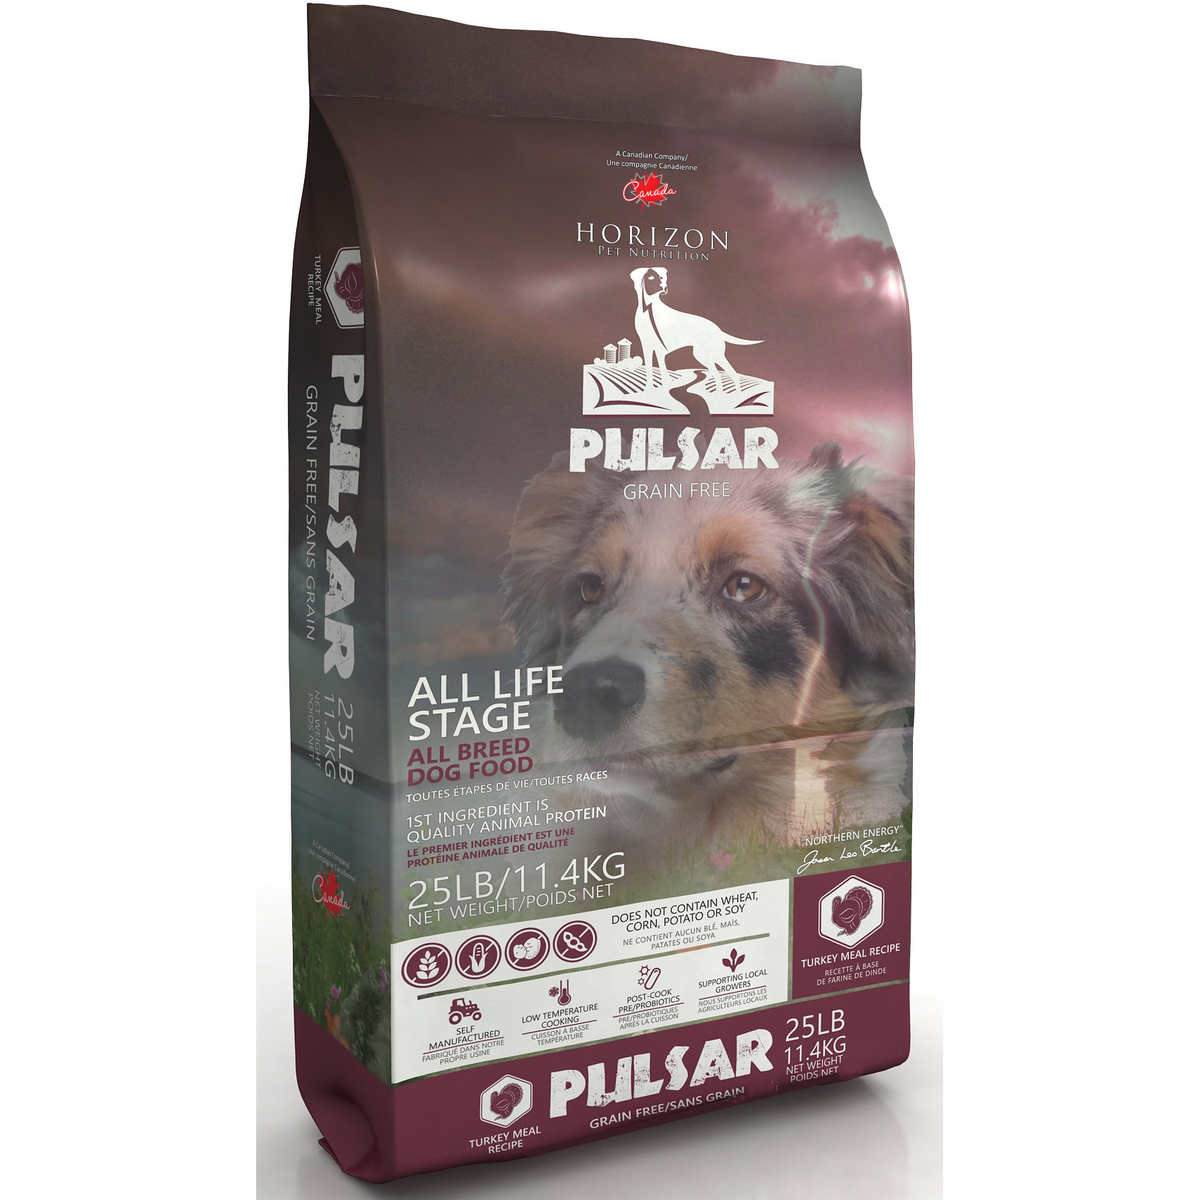 Horizon Pulsar Pulses and Turkey Formula Grain Free Dog Food